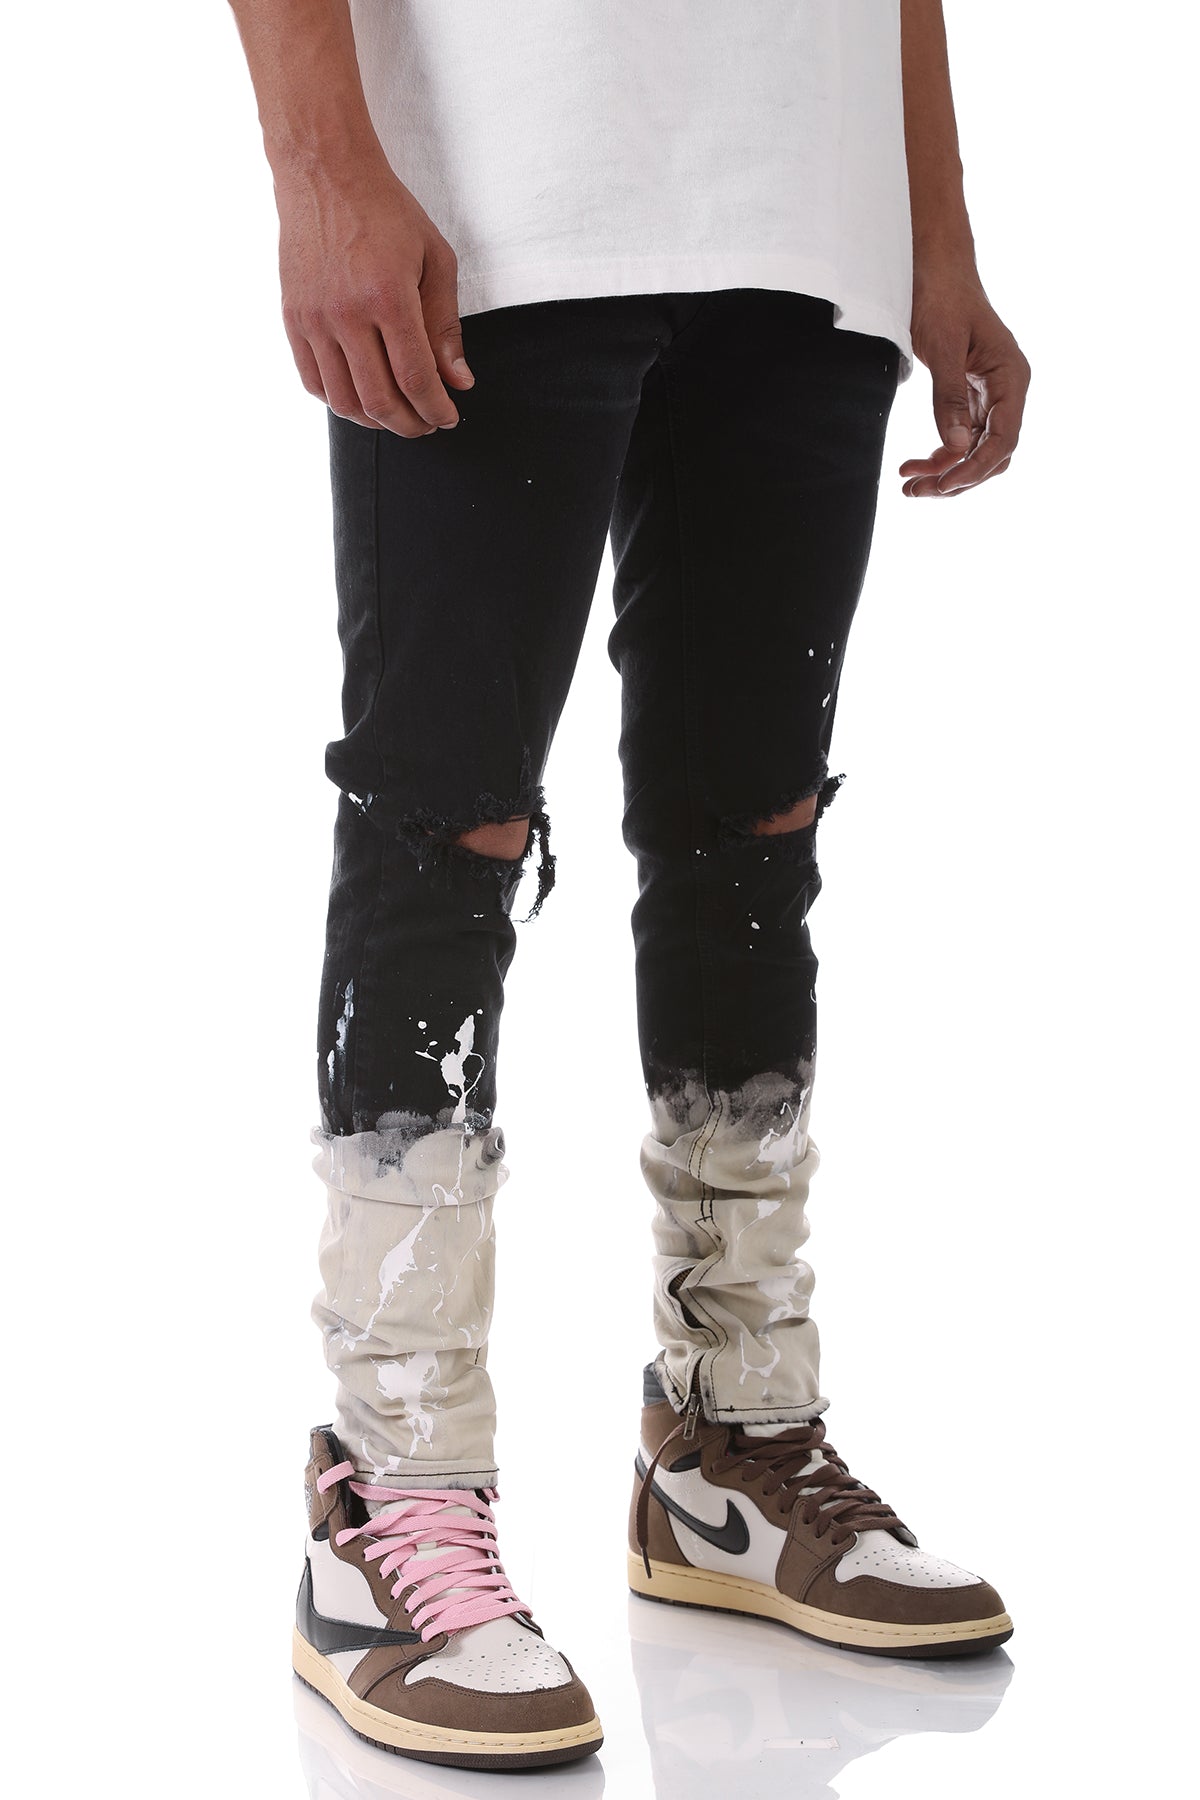 Jeans Metal Skull Pull Non Separating Zipper – Lulou Designs